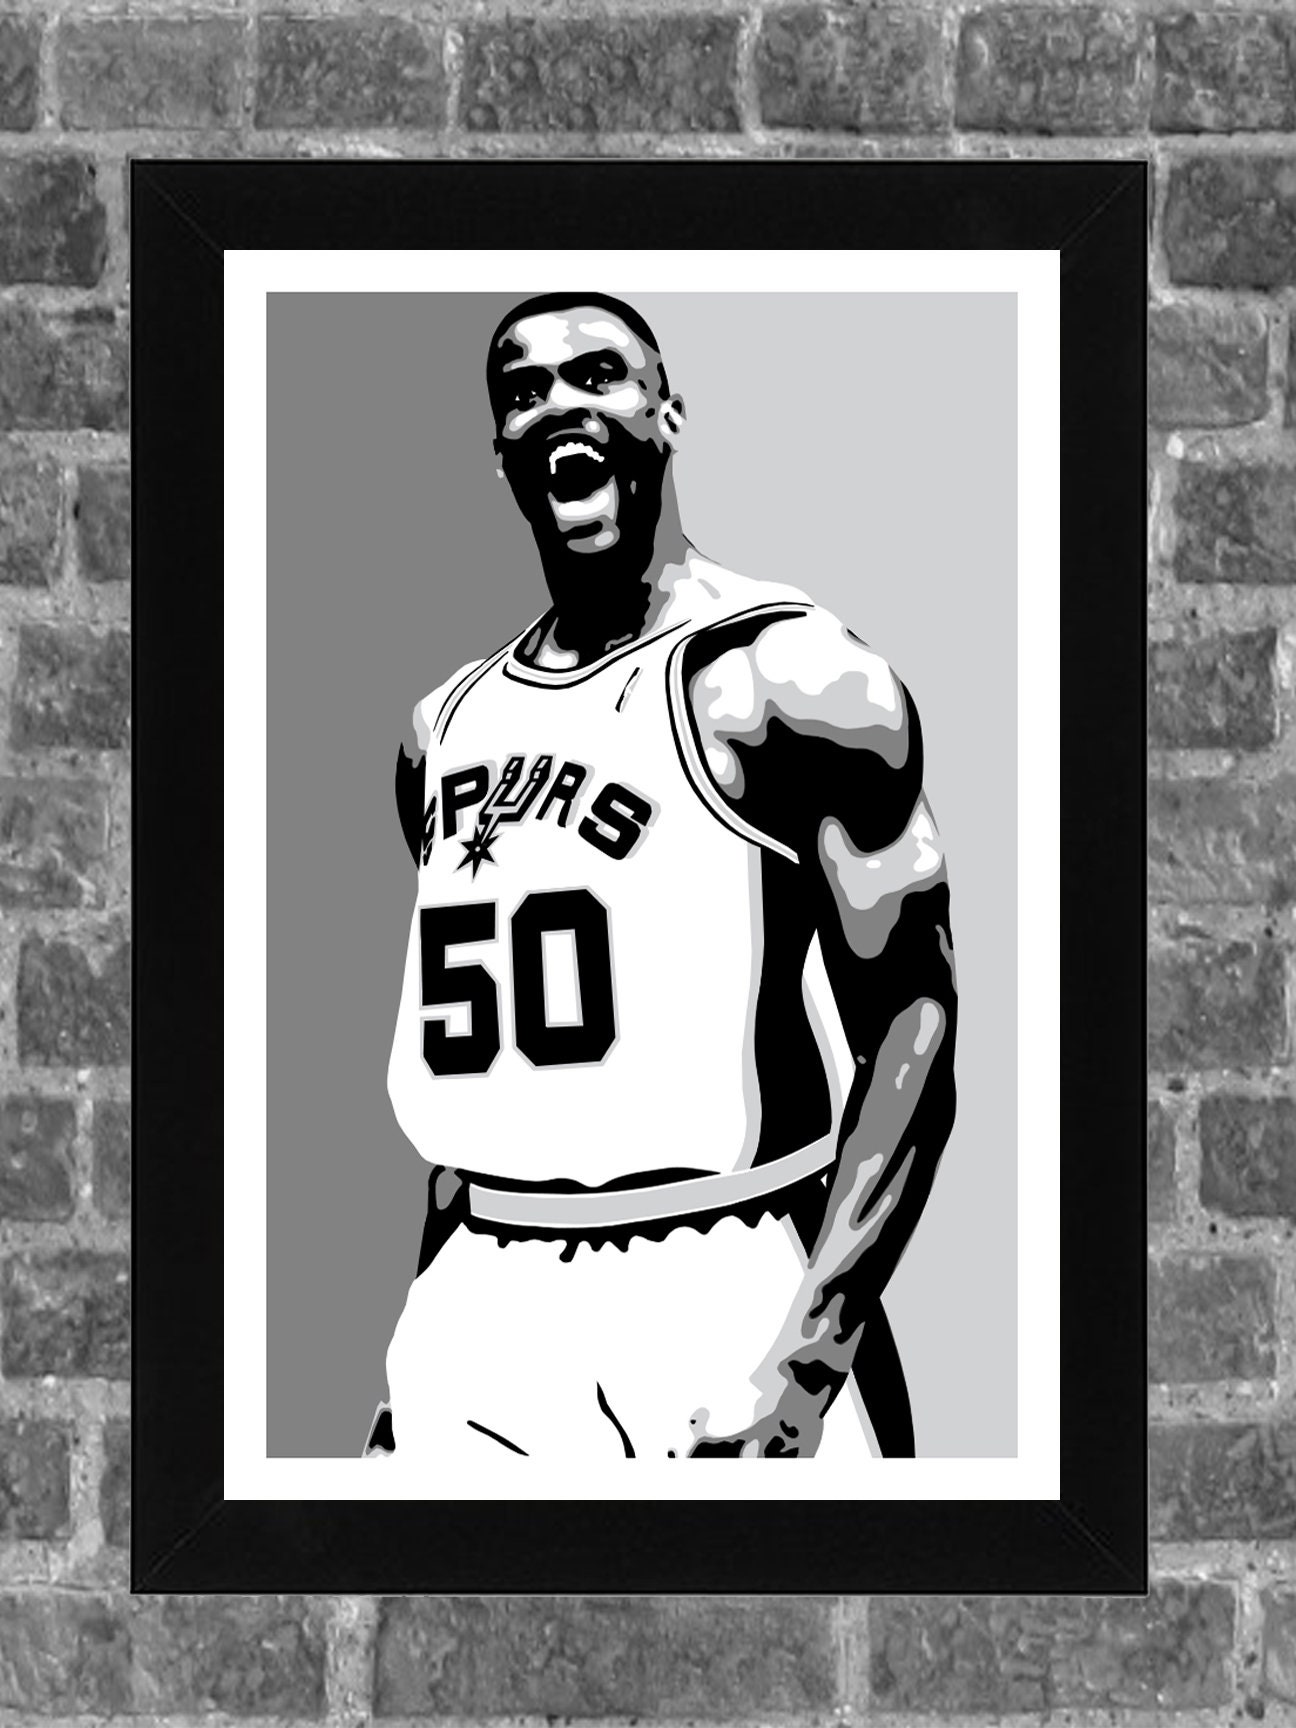 David Robinson San Antonio Spurs NBA Fan Apparel & Souvenirs for